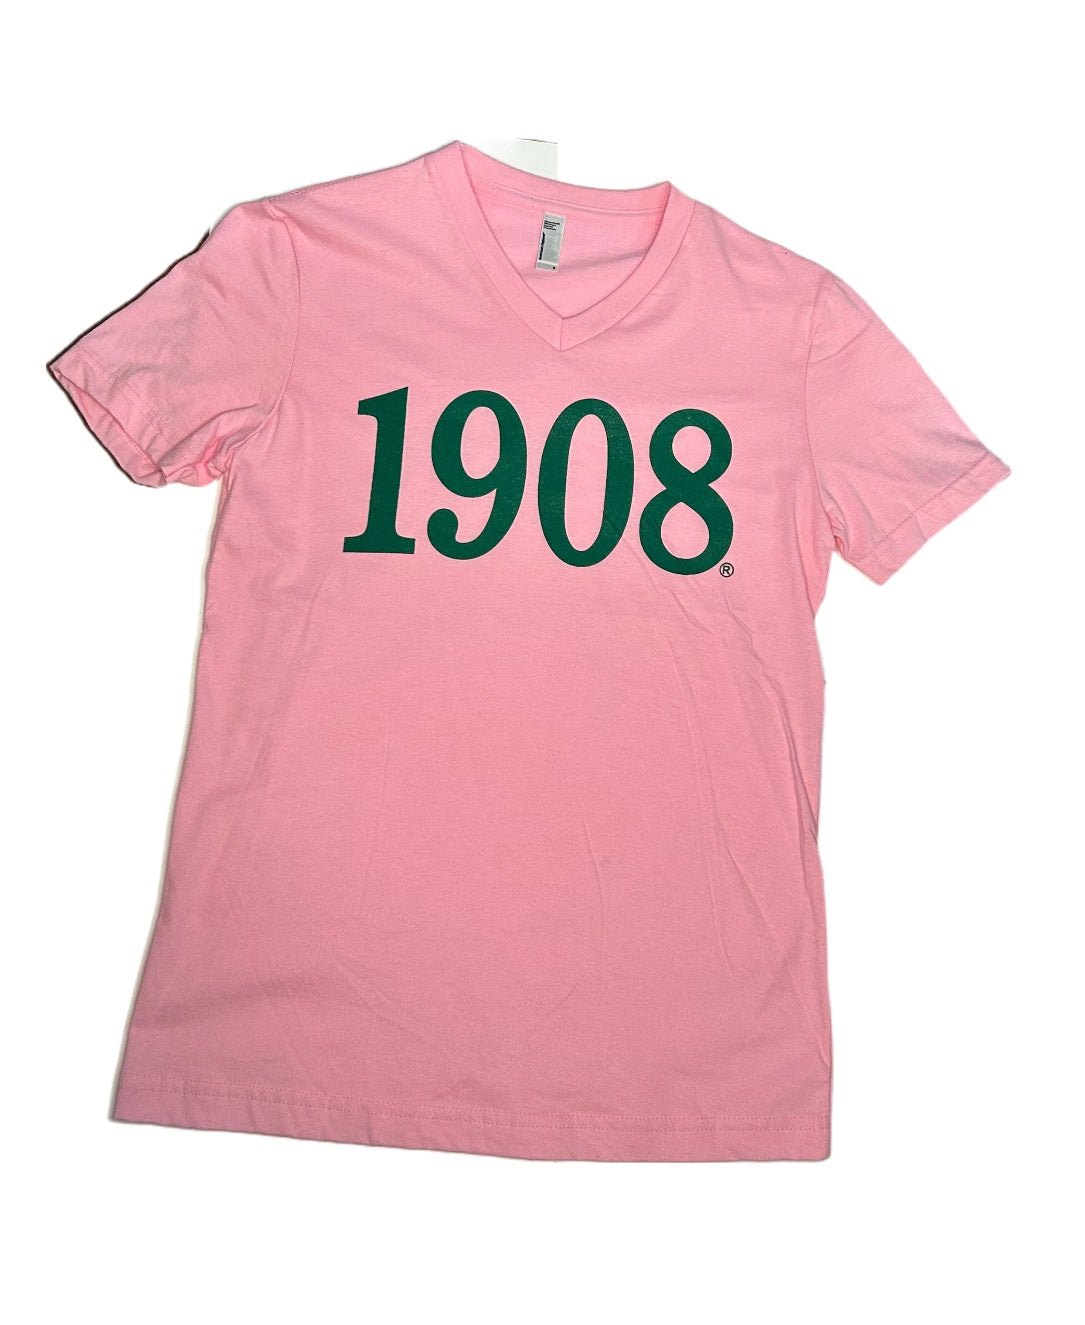 Alpha Kappa Alpha T-Shirt - 1908, Pink